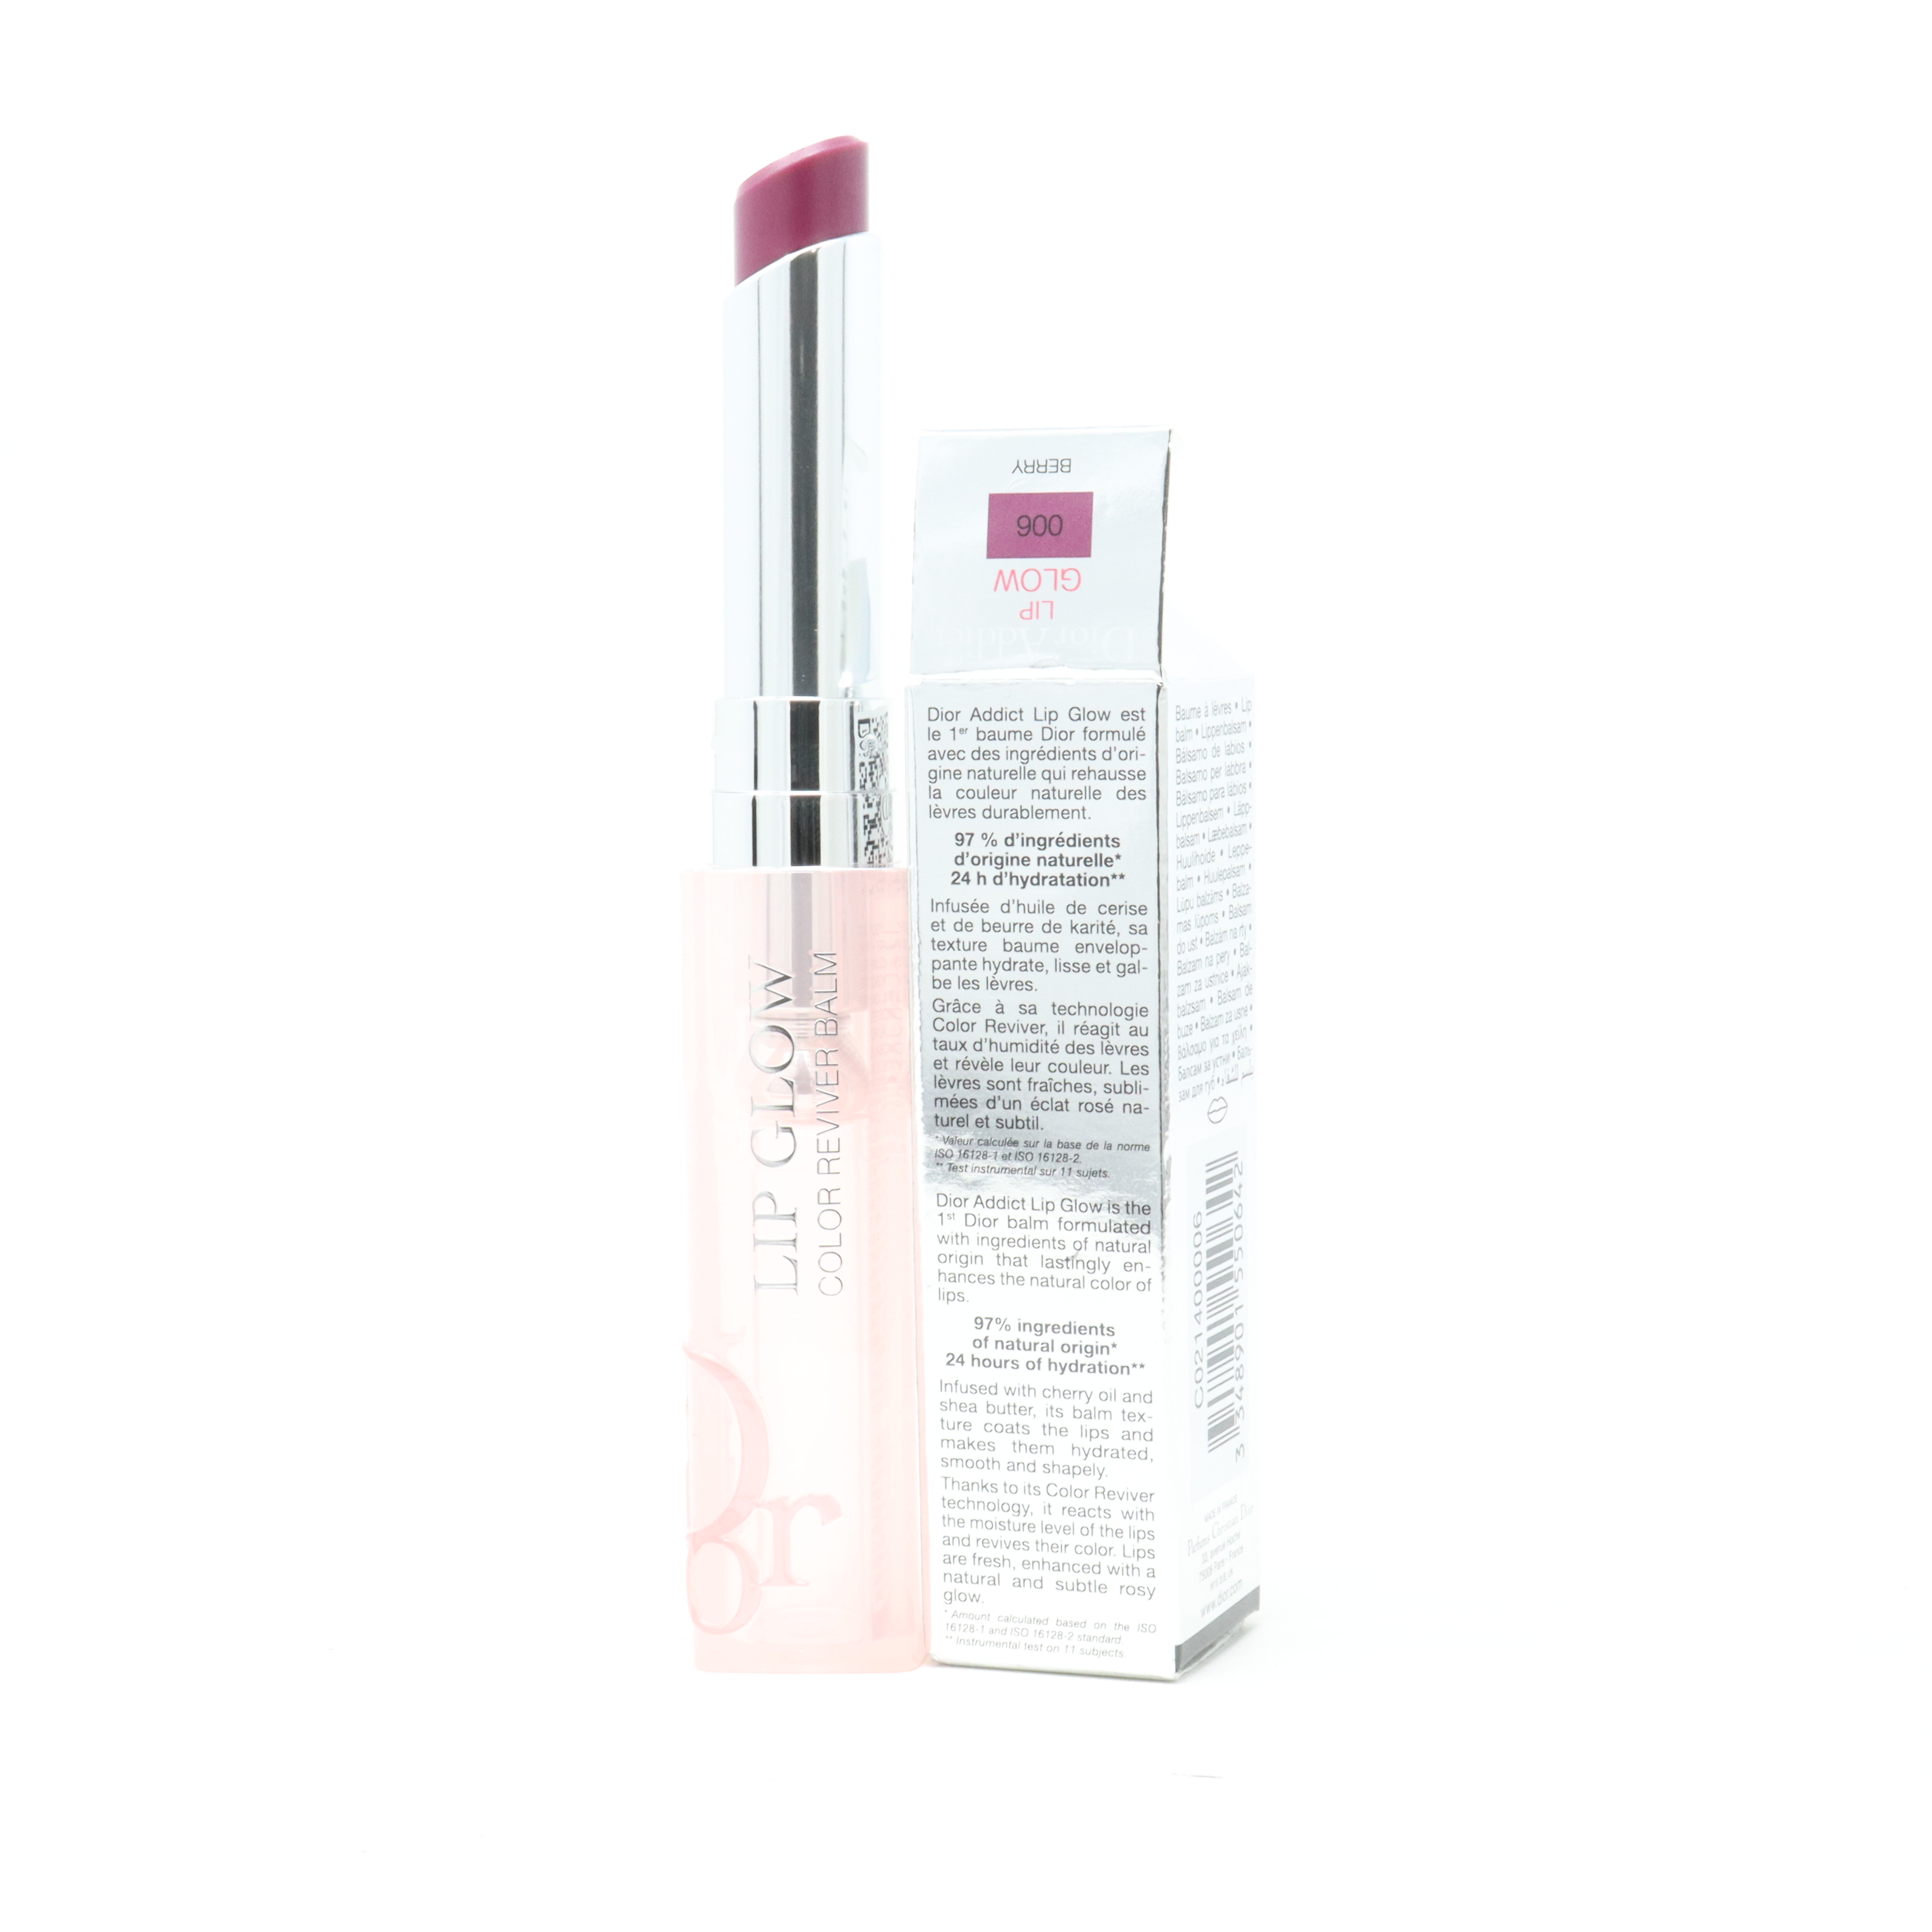 Box New Reviving Addict Balm Dior 0.11oz/3.2g Lip With Glow | eBay Lip